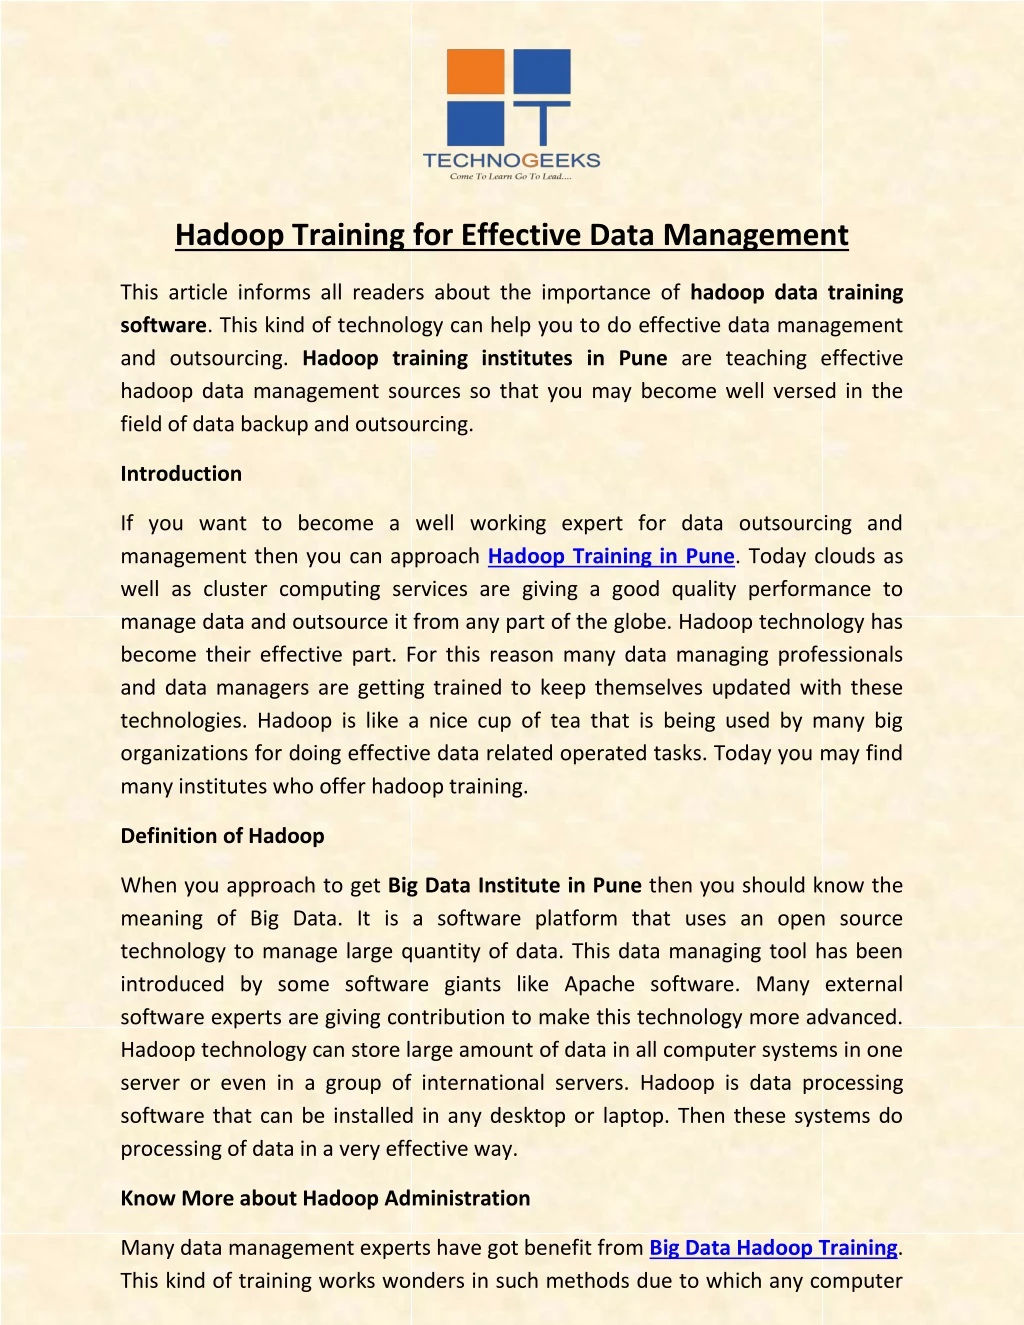 hadoop training for effective data management